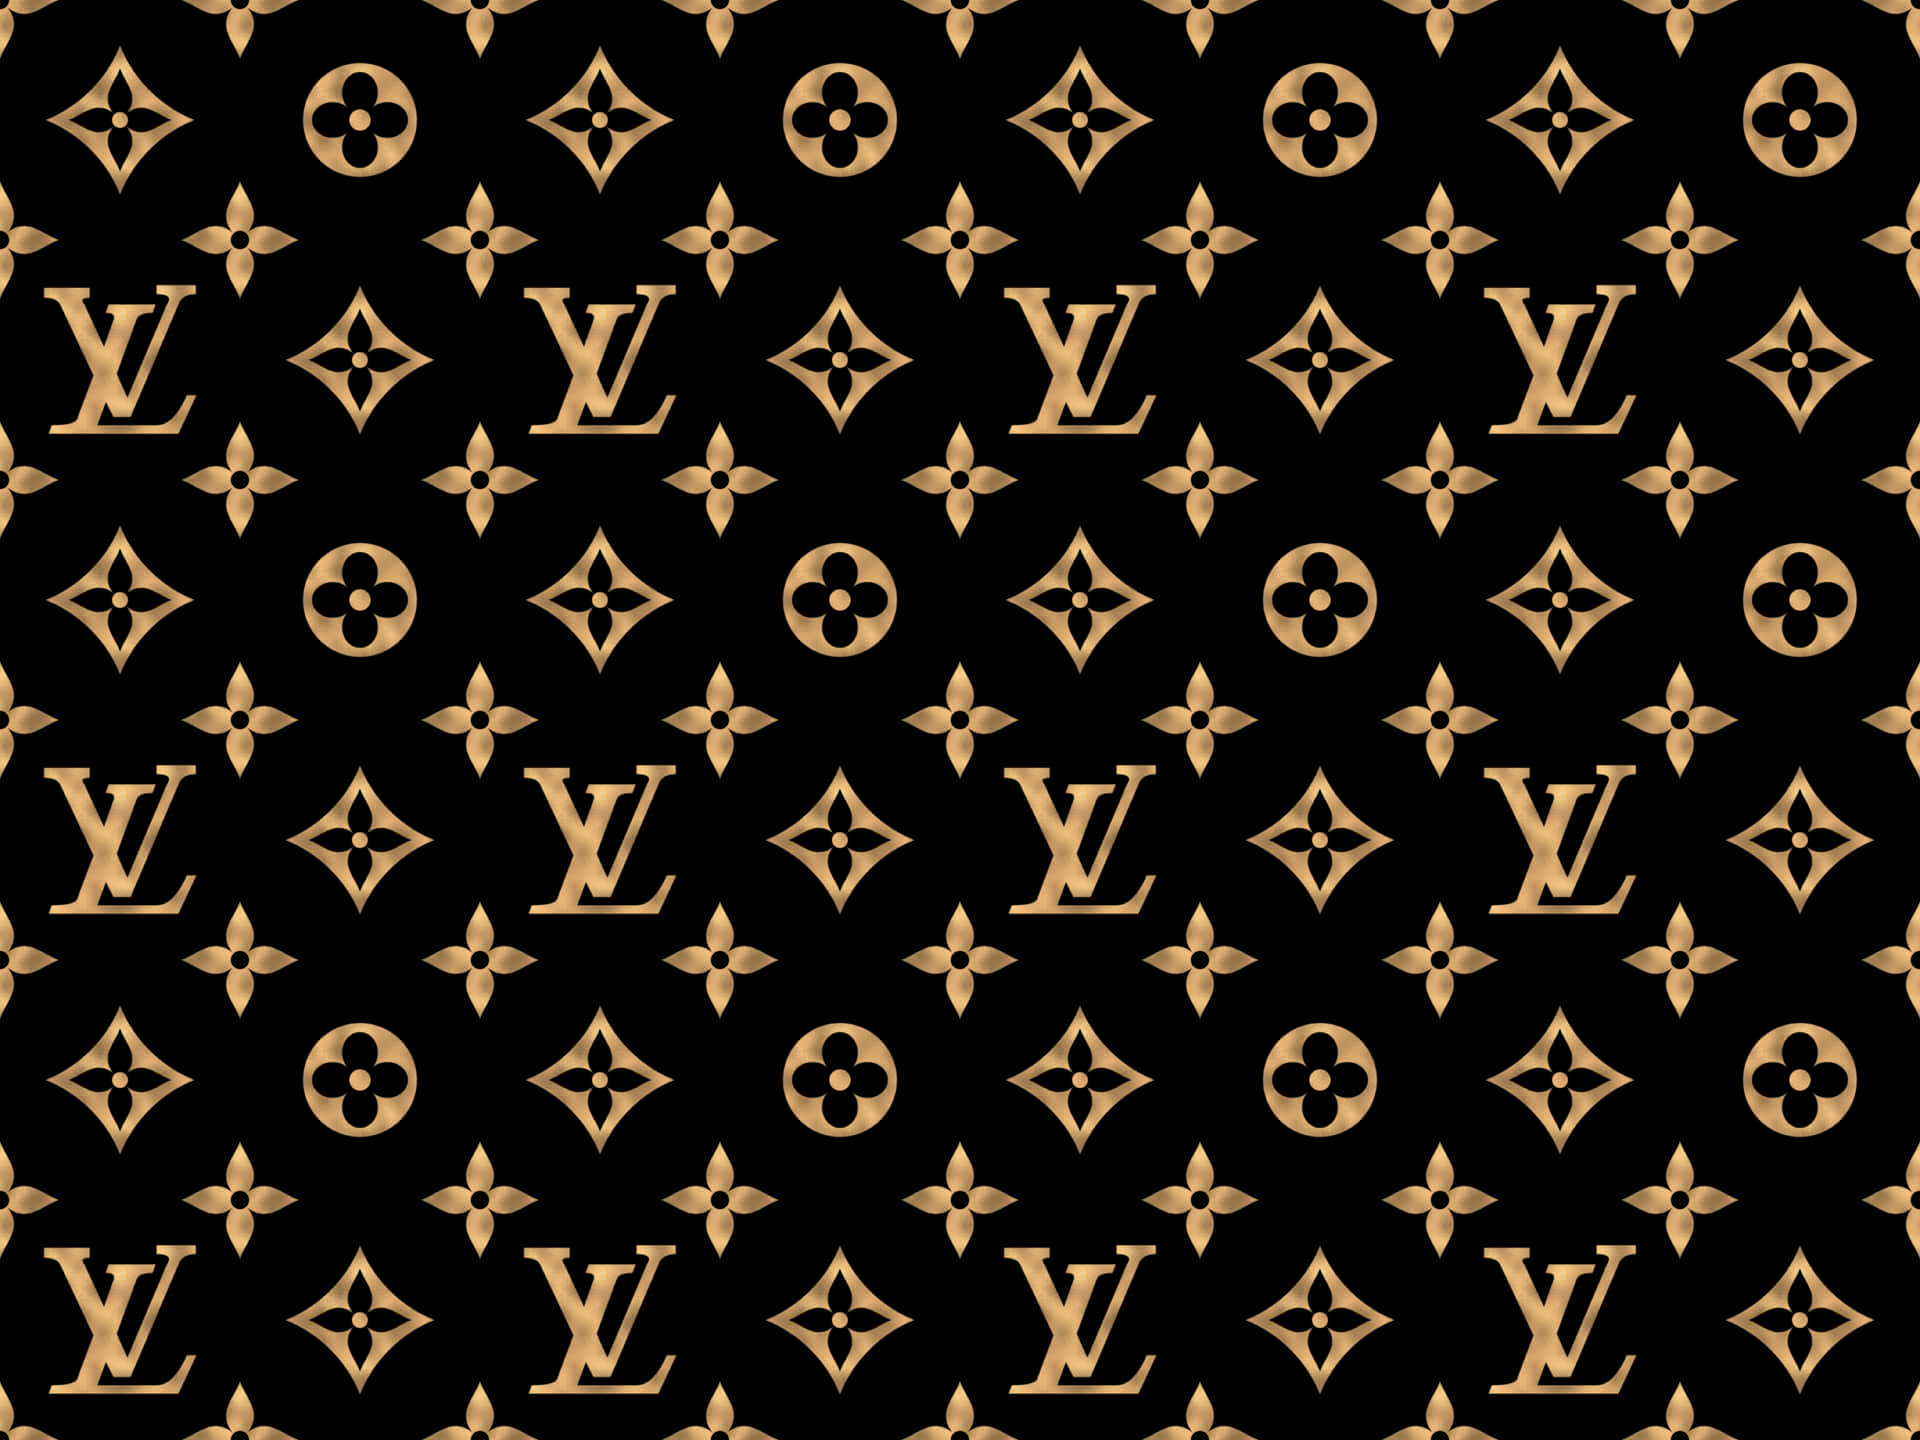 Pattern Louis Vuitton Wallpaper iphone 6 plus, Pattern Loui…